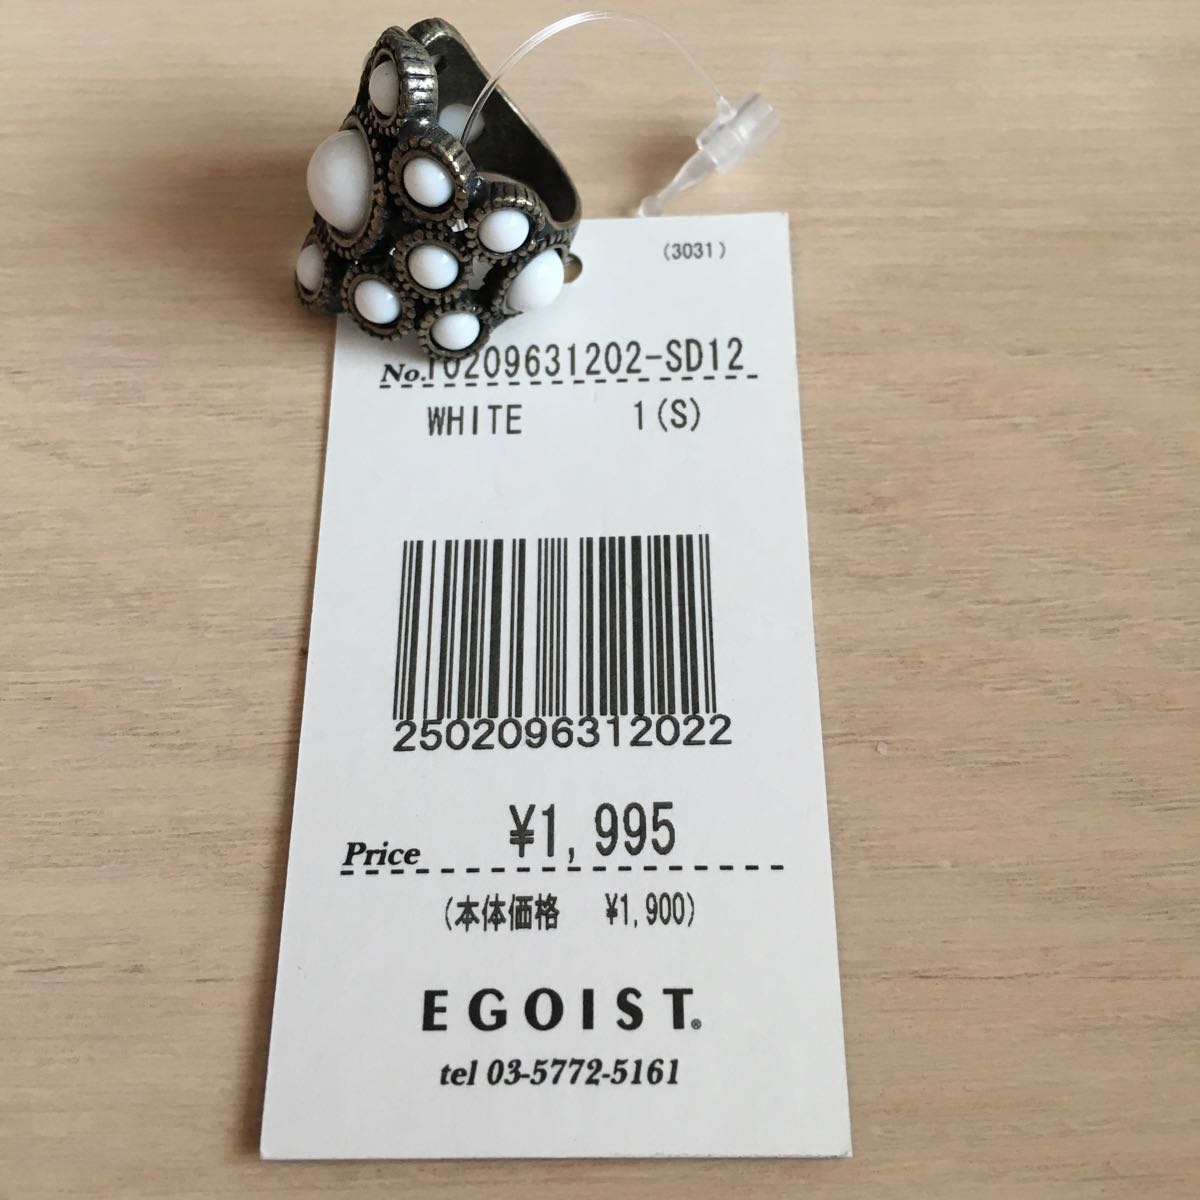 EGOIST Egoist ring WHITE size 1(S) regular price 1995 jpy 